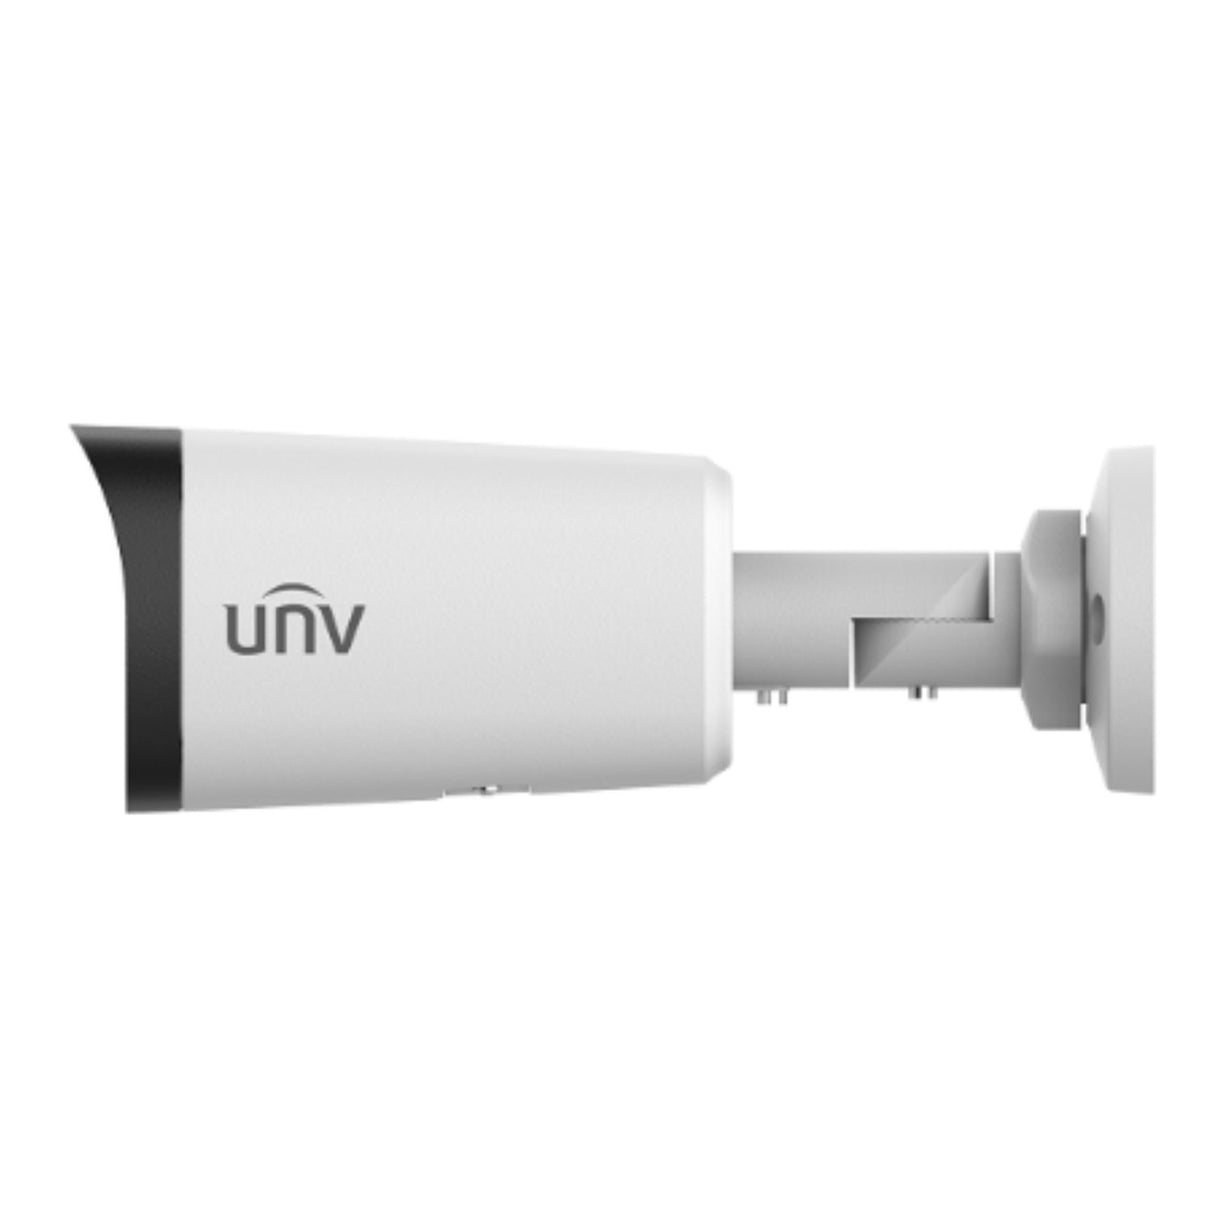 Uniview Security Camera: 5MP Bullet, 2.8-12mm - IPC2325LB-ADZK-G